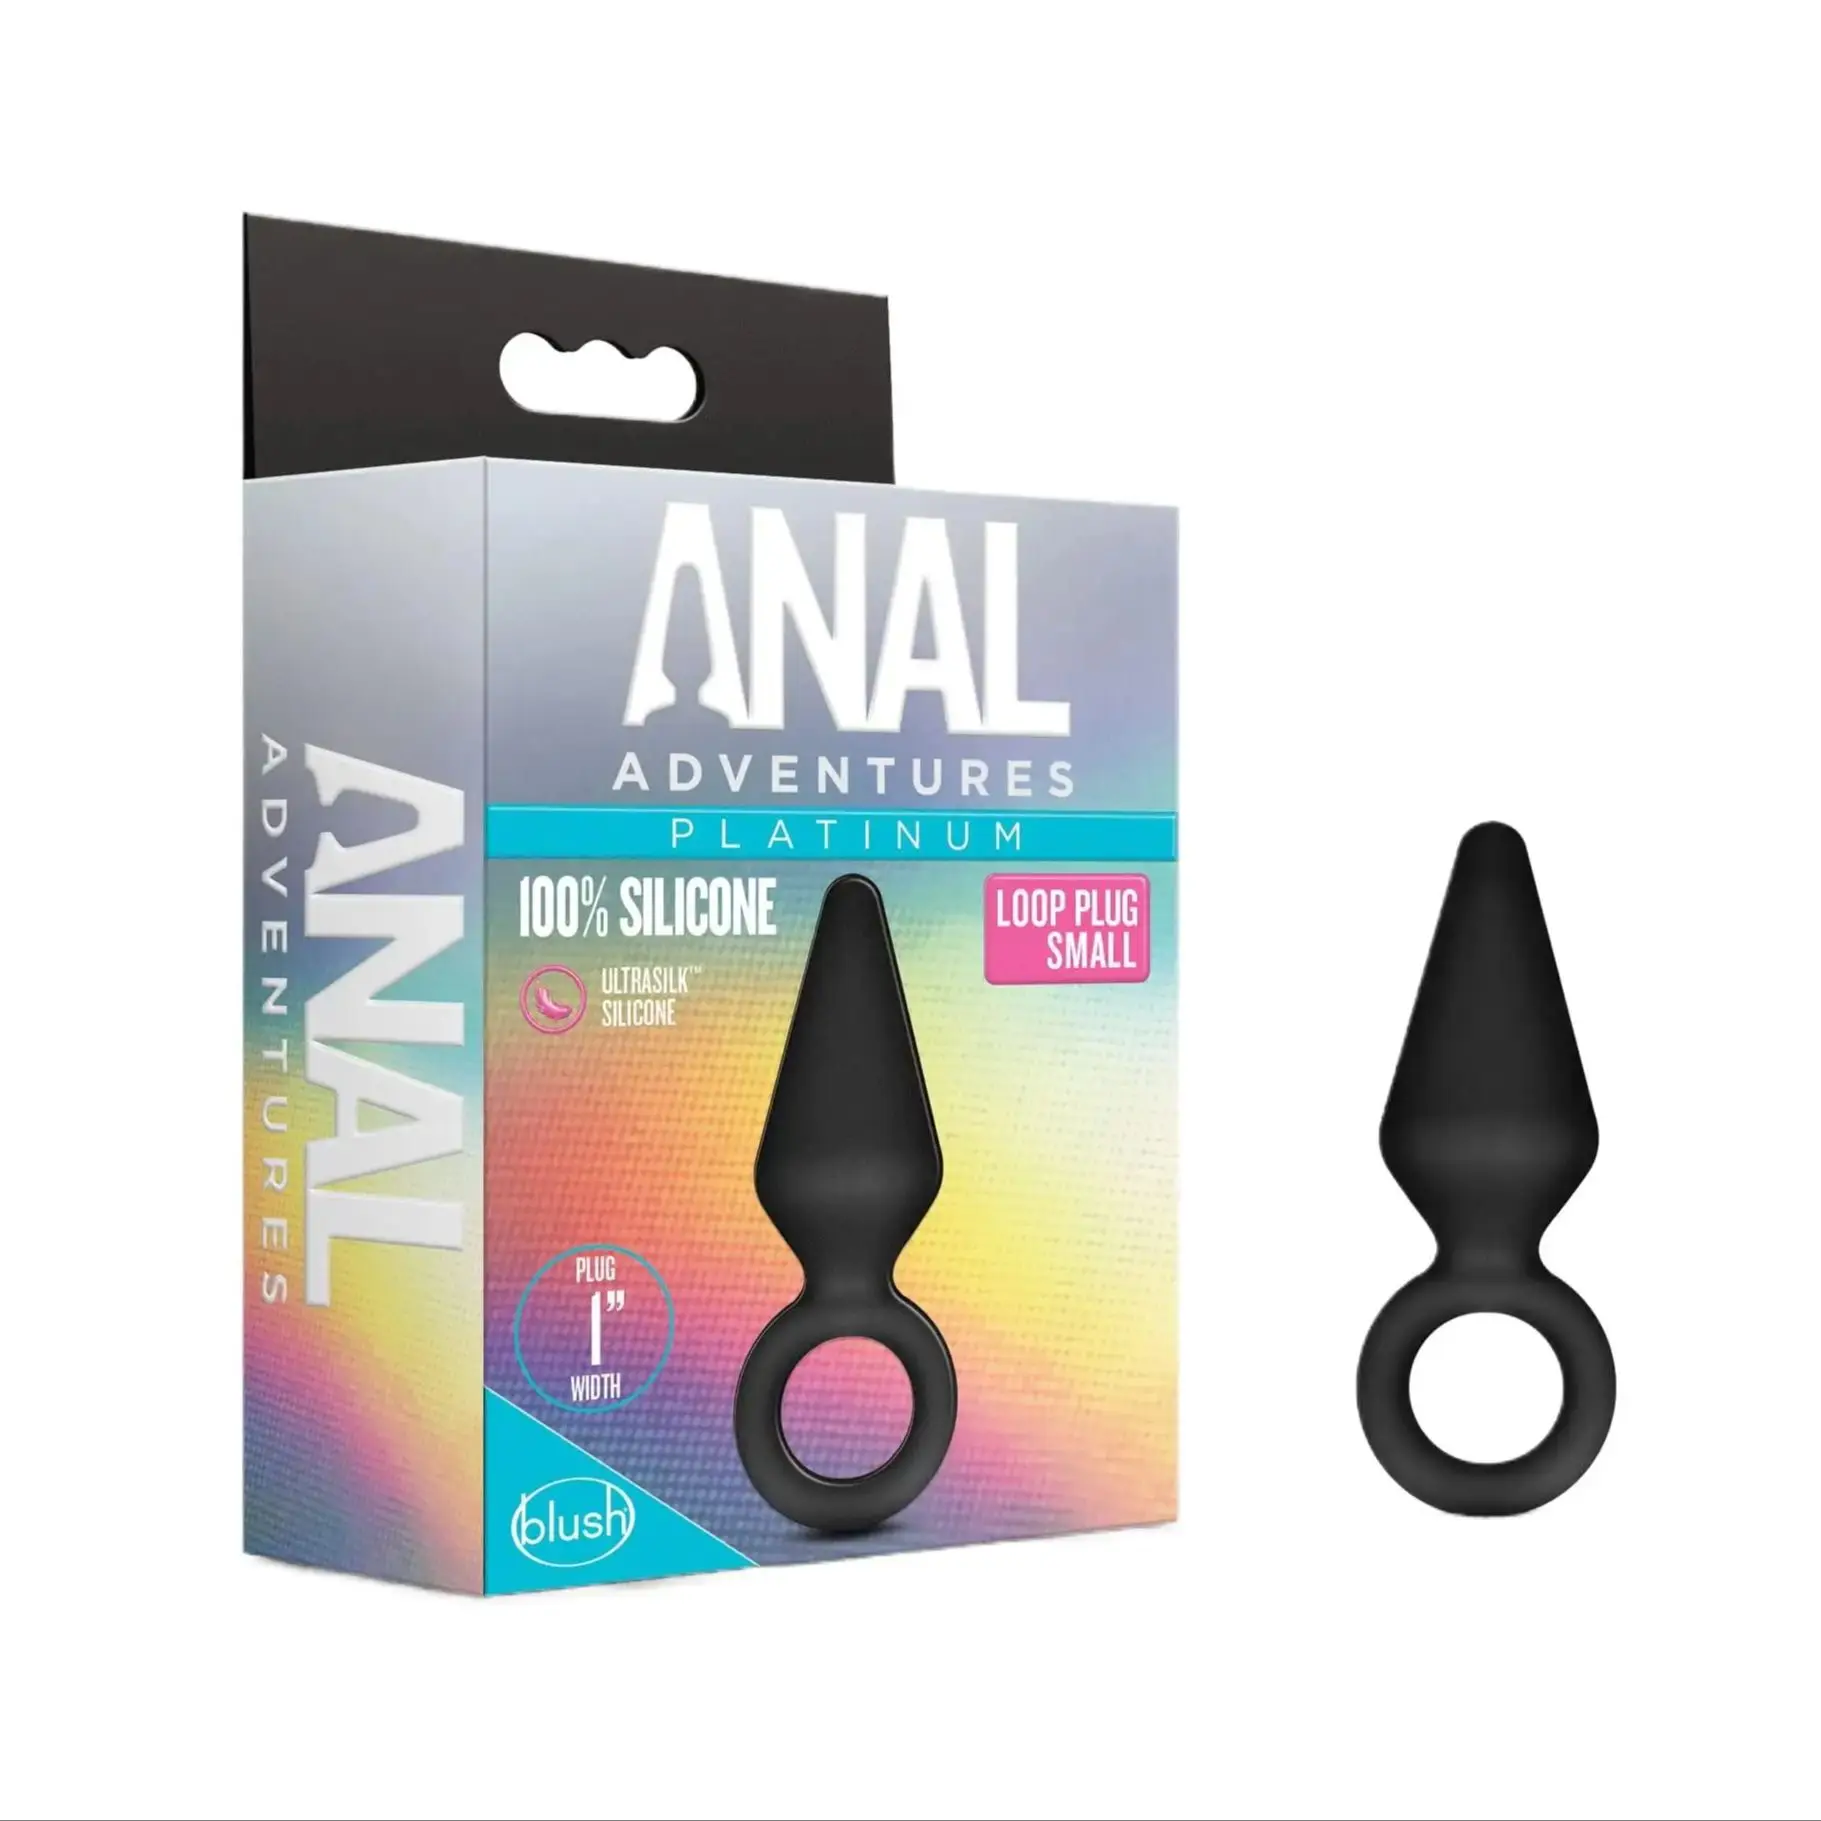 

Blush Anal Adventures Platinum Ultrasilk Silicone Retrieval Ring - Small Beginners Training 3 Inch Butt Plug Adult Toy - Latex